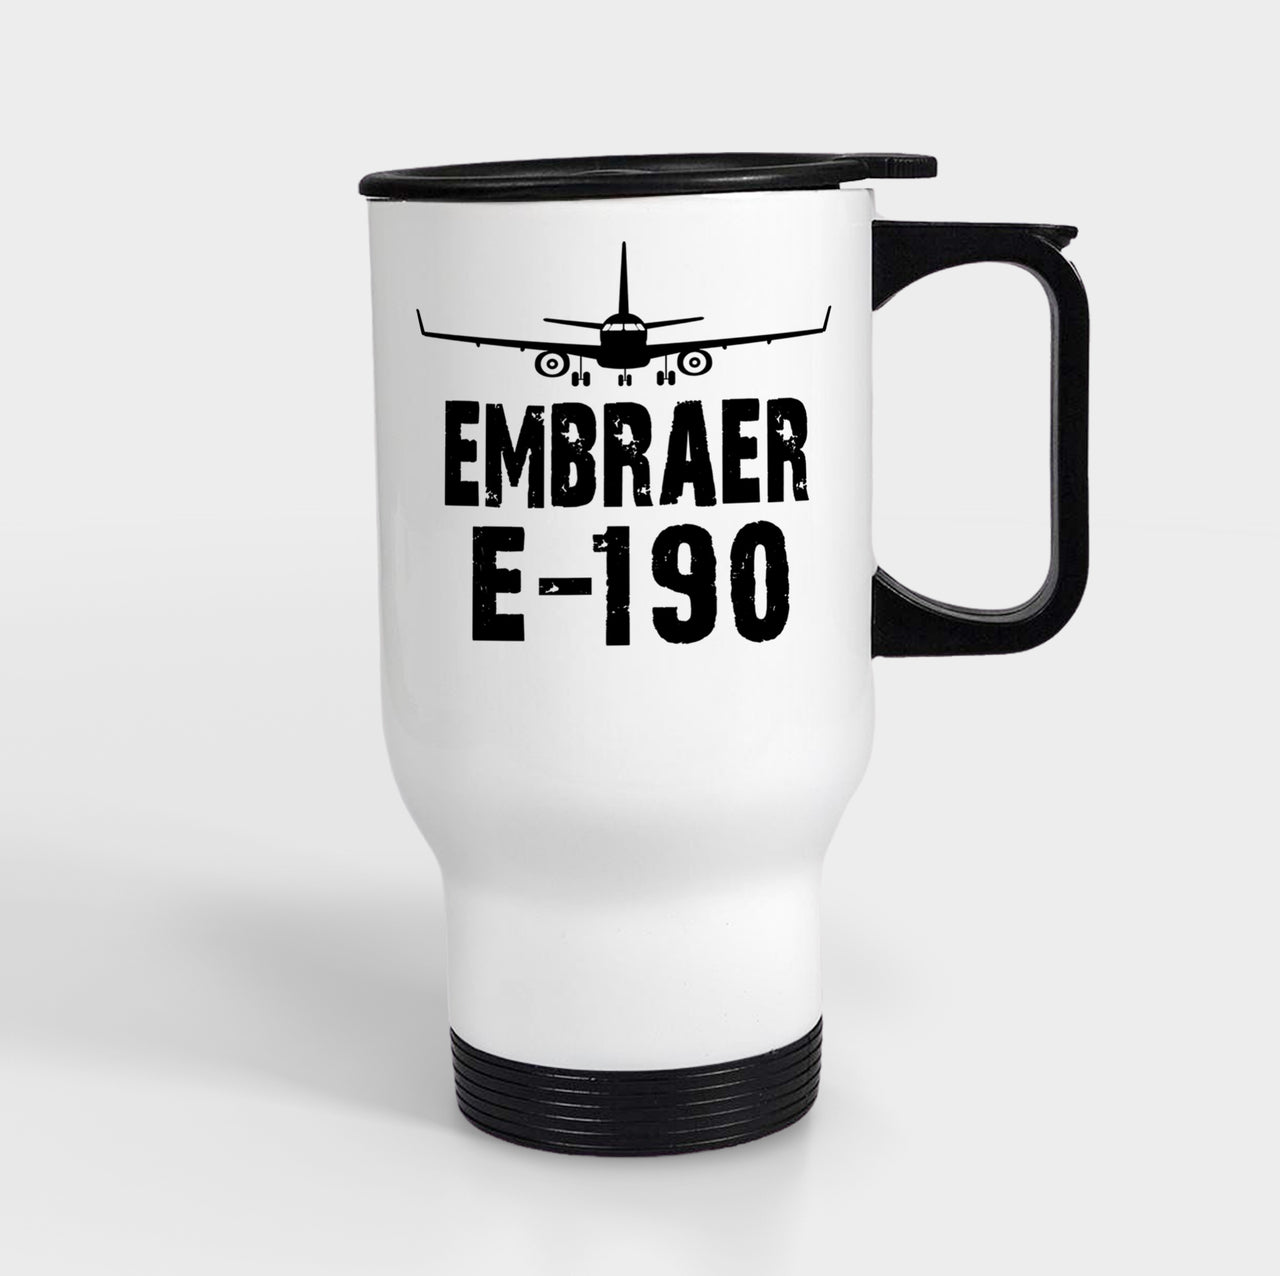 Embraer E-190 & Plane Designed Travel Mugs (With Holder)